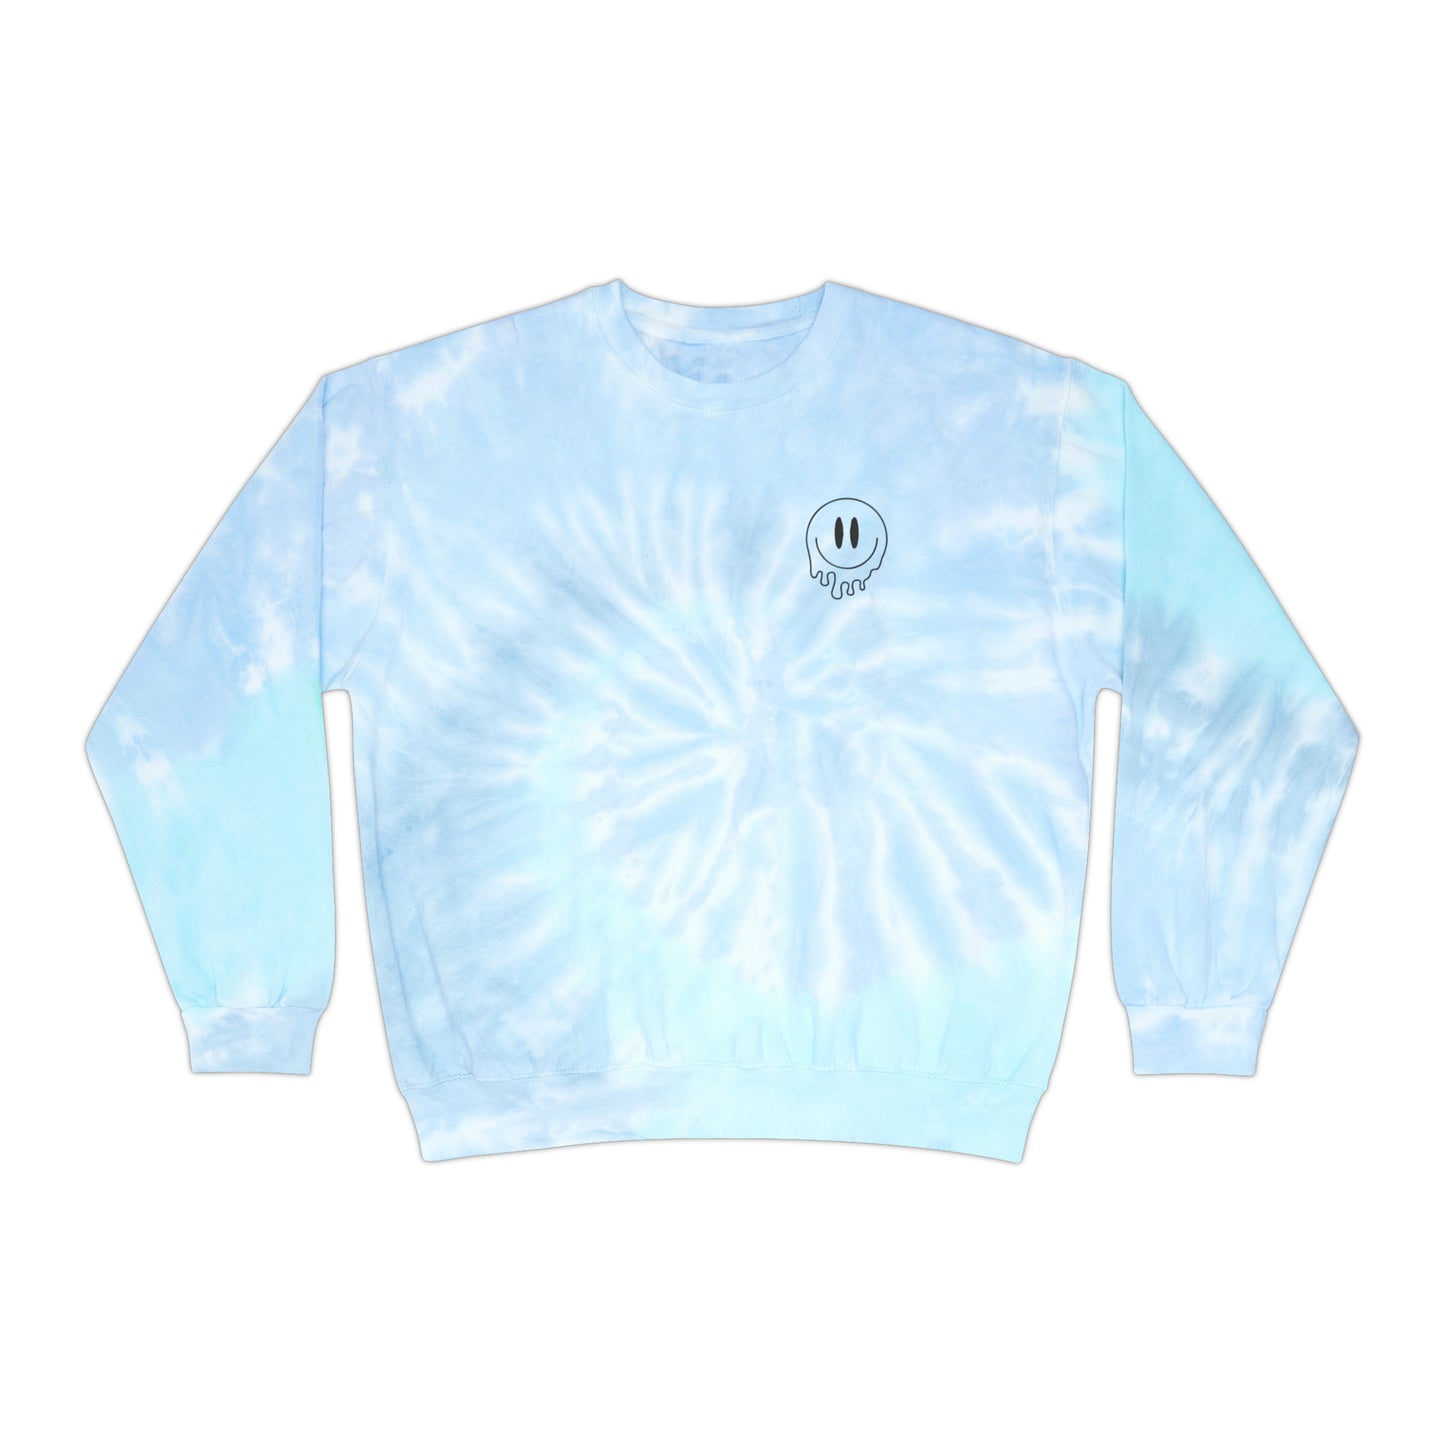 Psychedelic Smiley Face Blue Lagoon Tie-Dye Crew Neck Sweatshirt